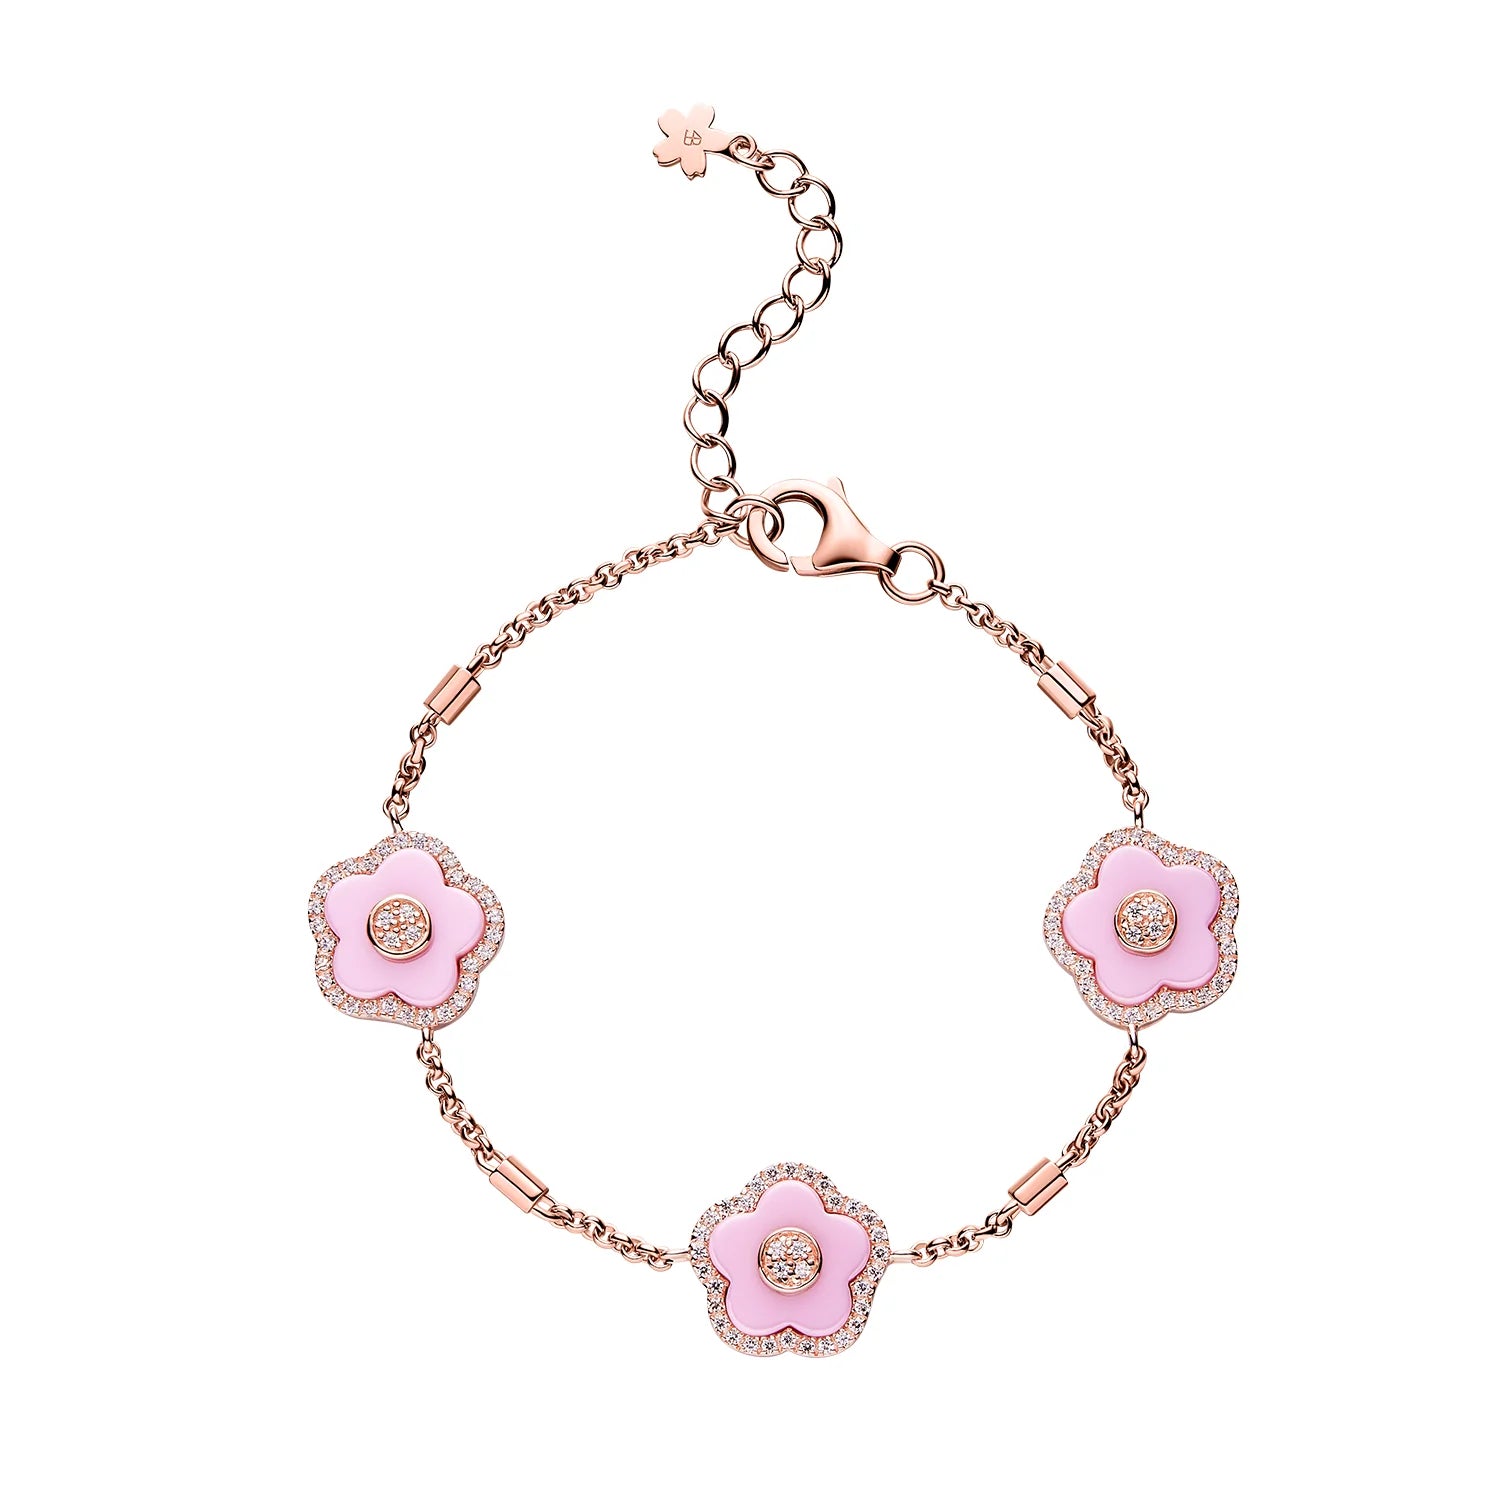 Pink Diamond Cherry Blossom Ceramic Watch With Flower Ceramic Bracelet